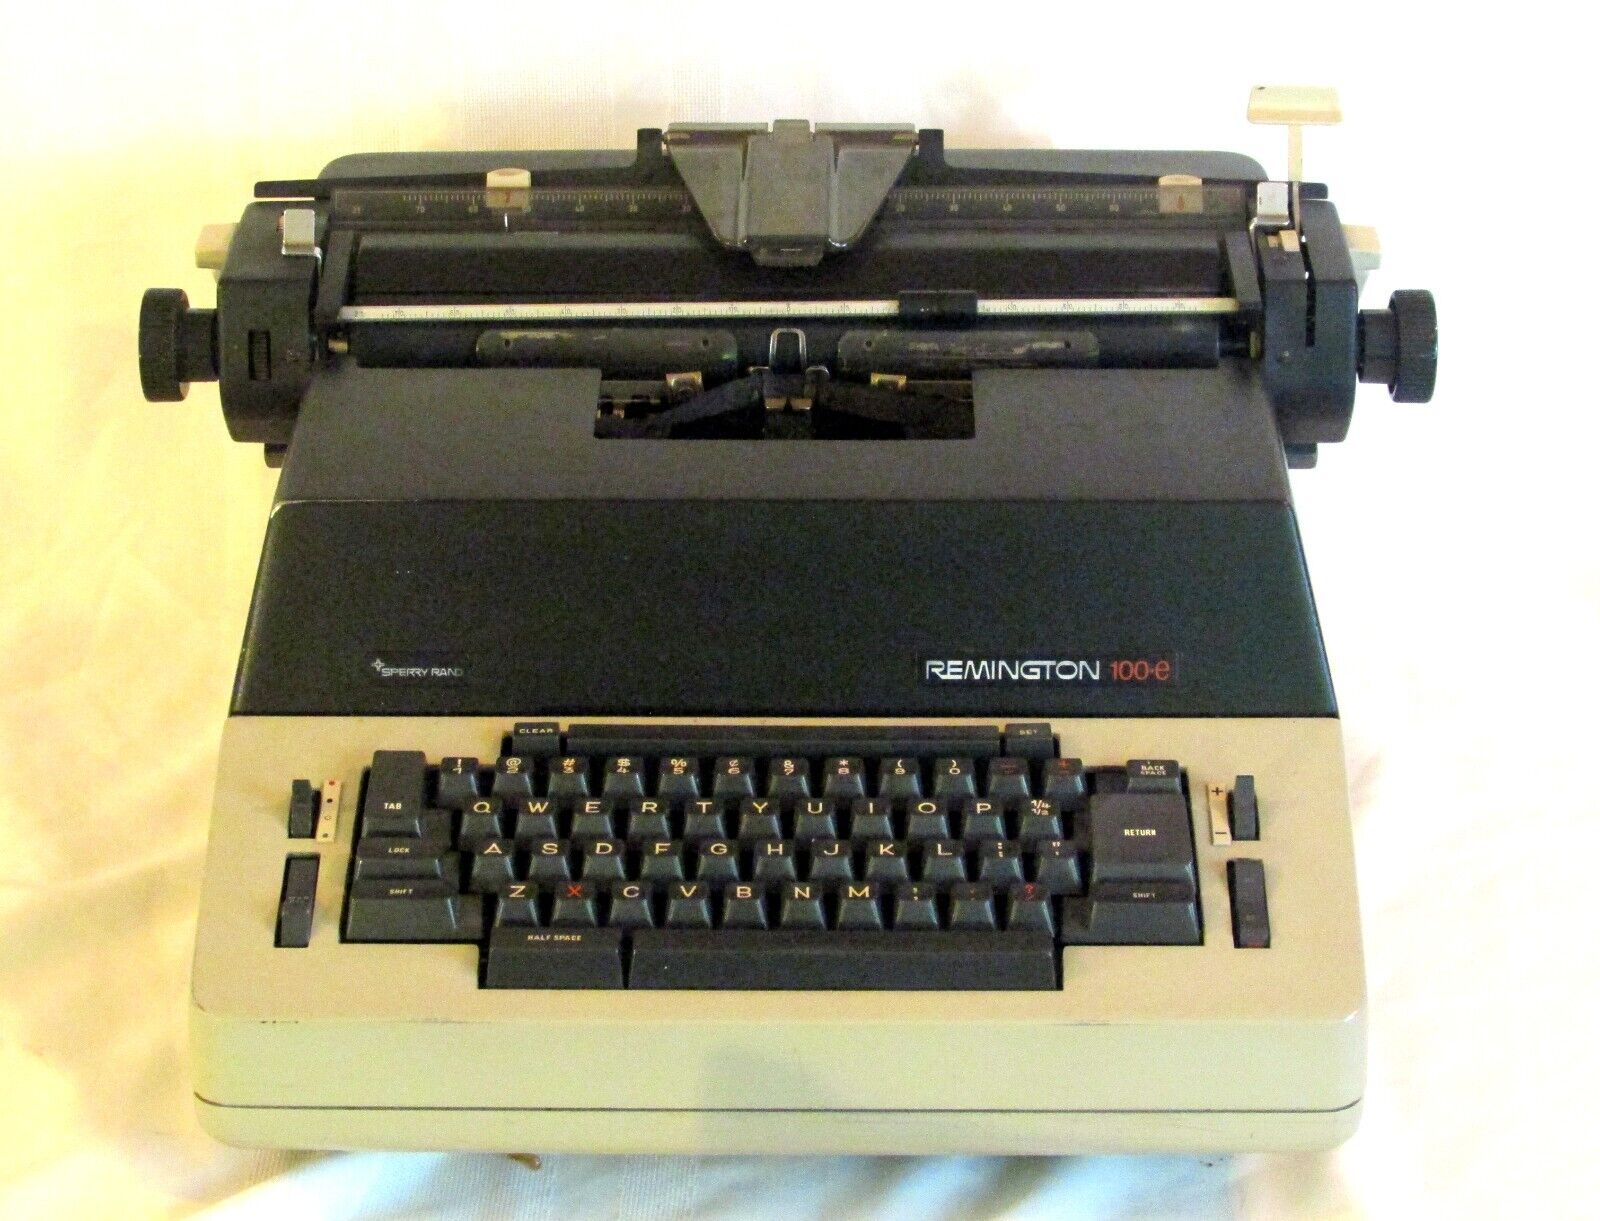 Vintage Sperry Rand Remington 100E Electric Typewriter Heavy